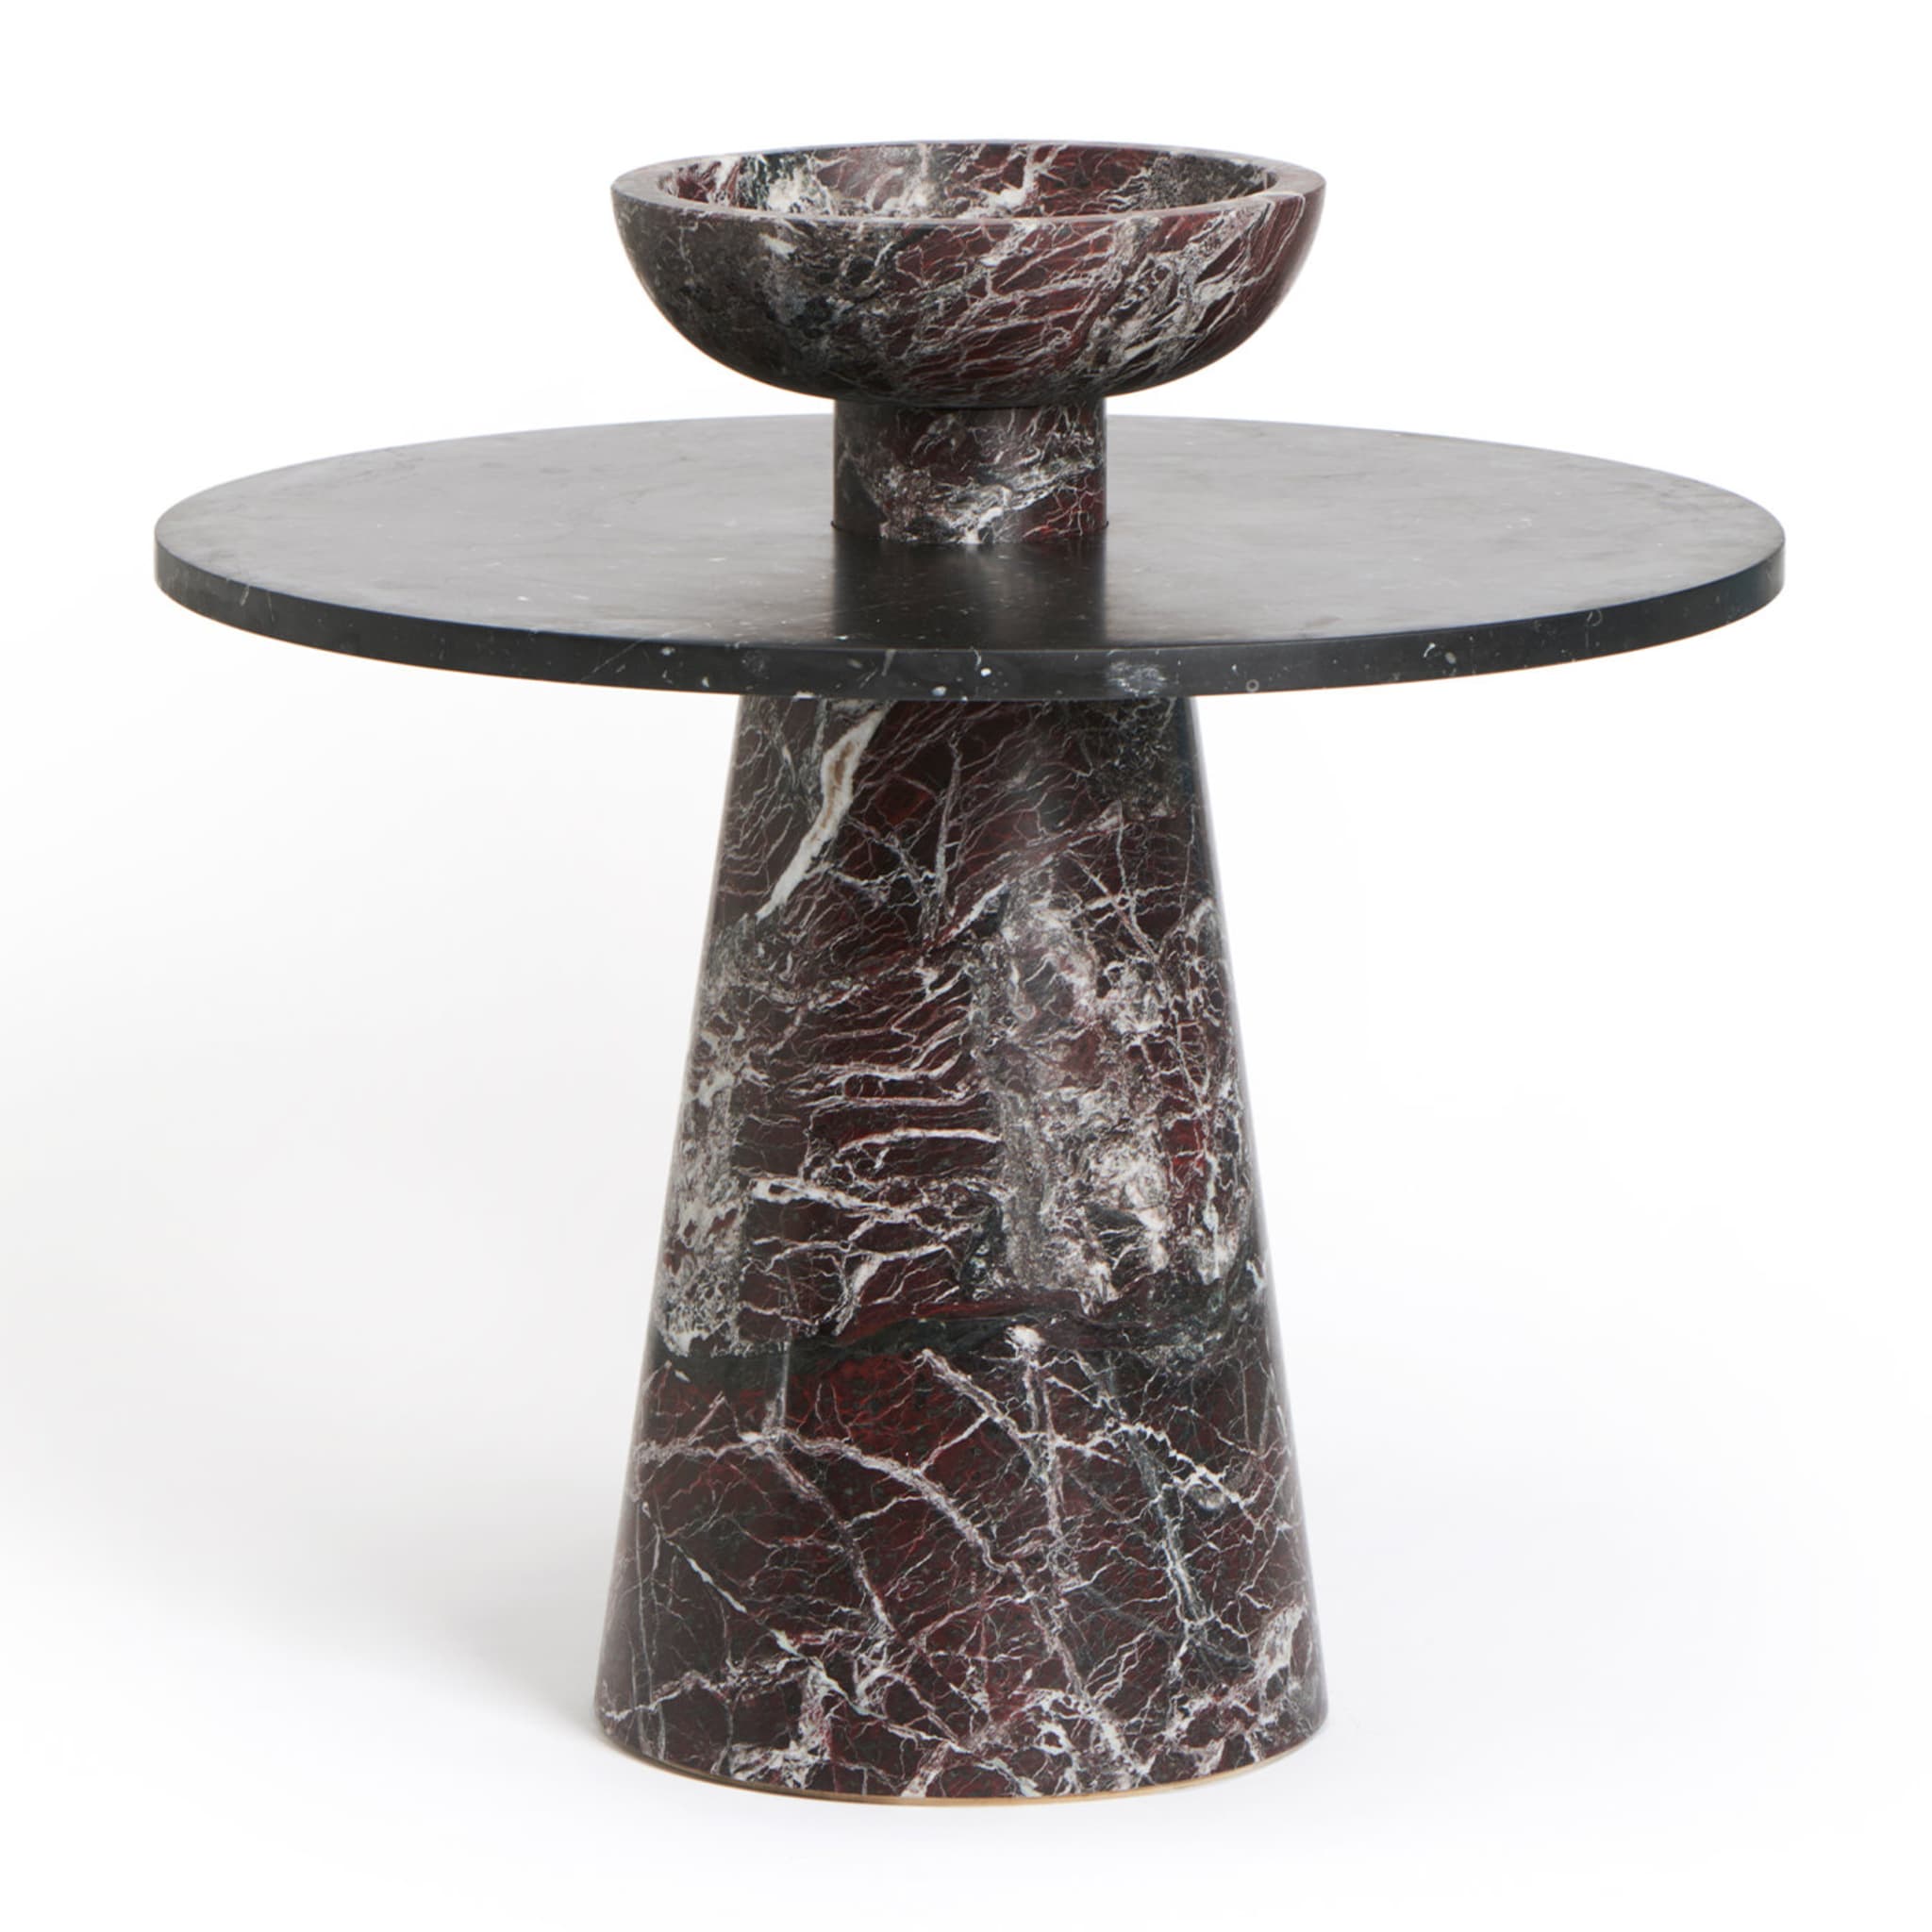 Inside Out Red/Black Marble Coffee Table by Karen Chekerdjian #1 - Alternative view 2